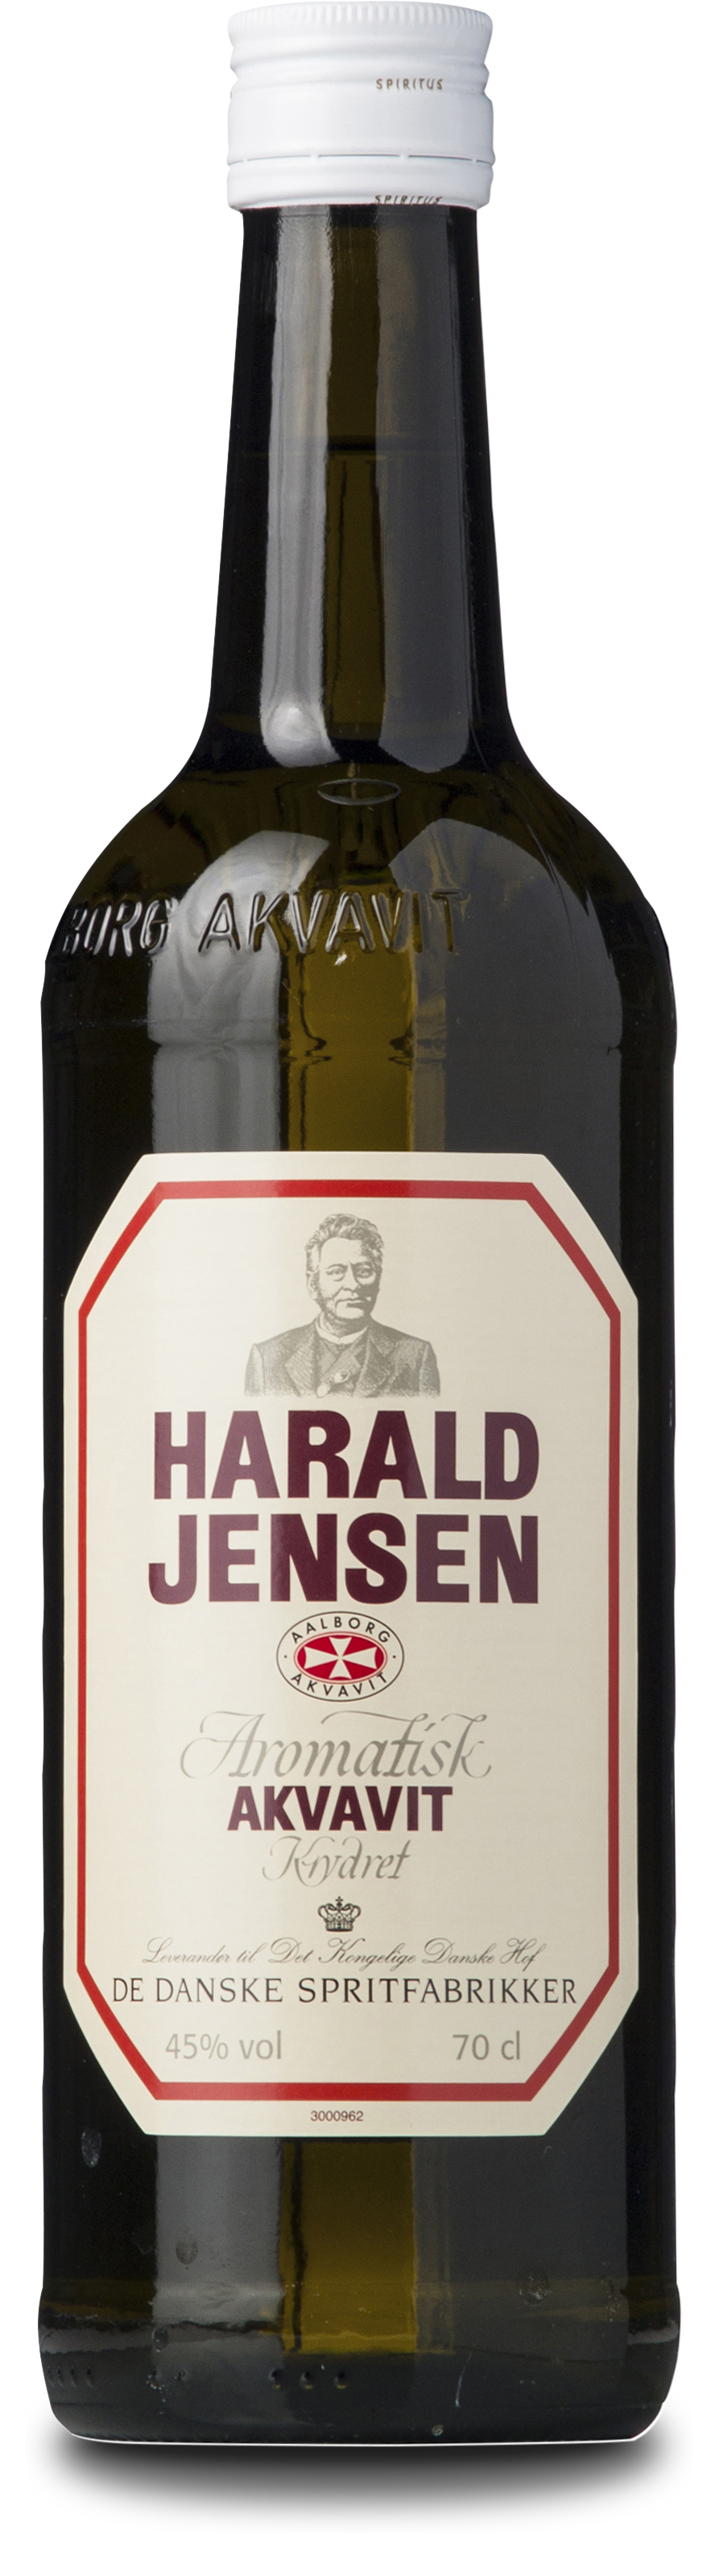 Harald Jensen 45%, 70 cl